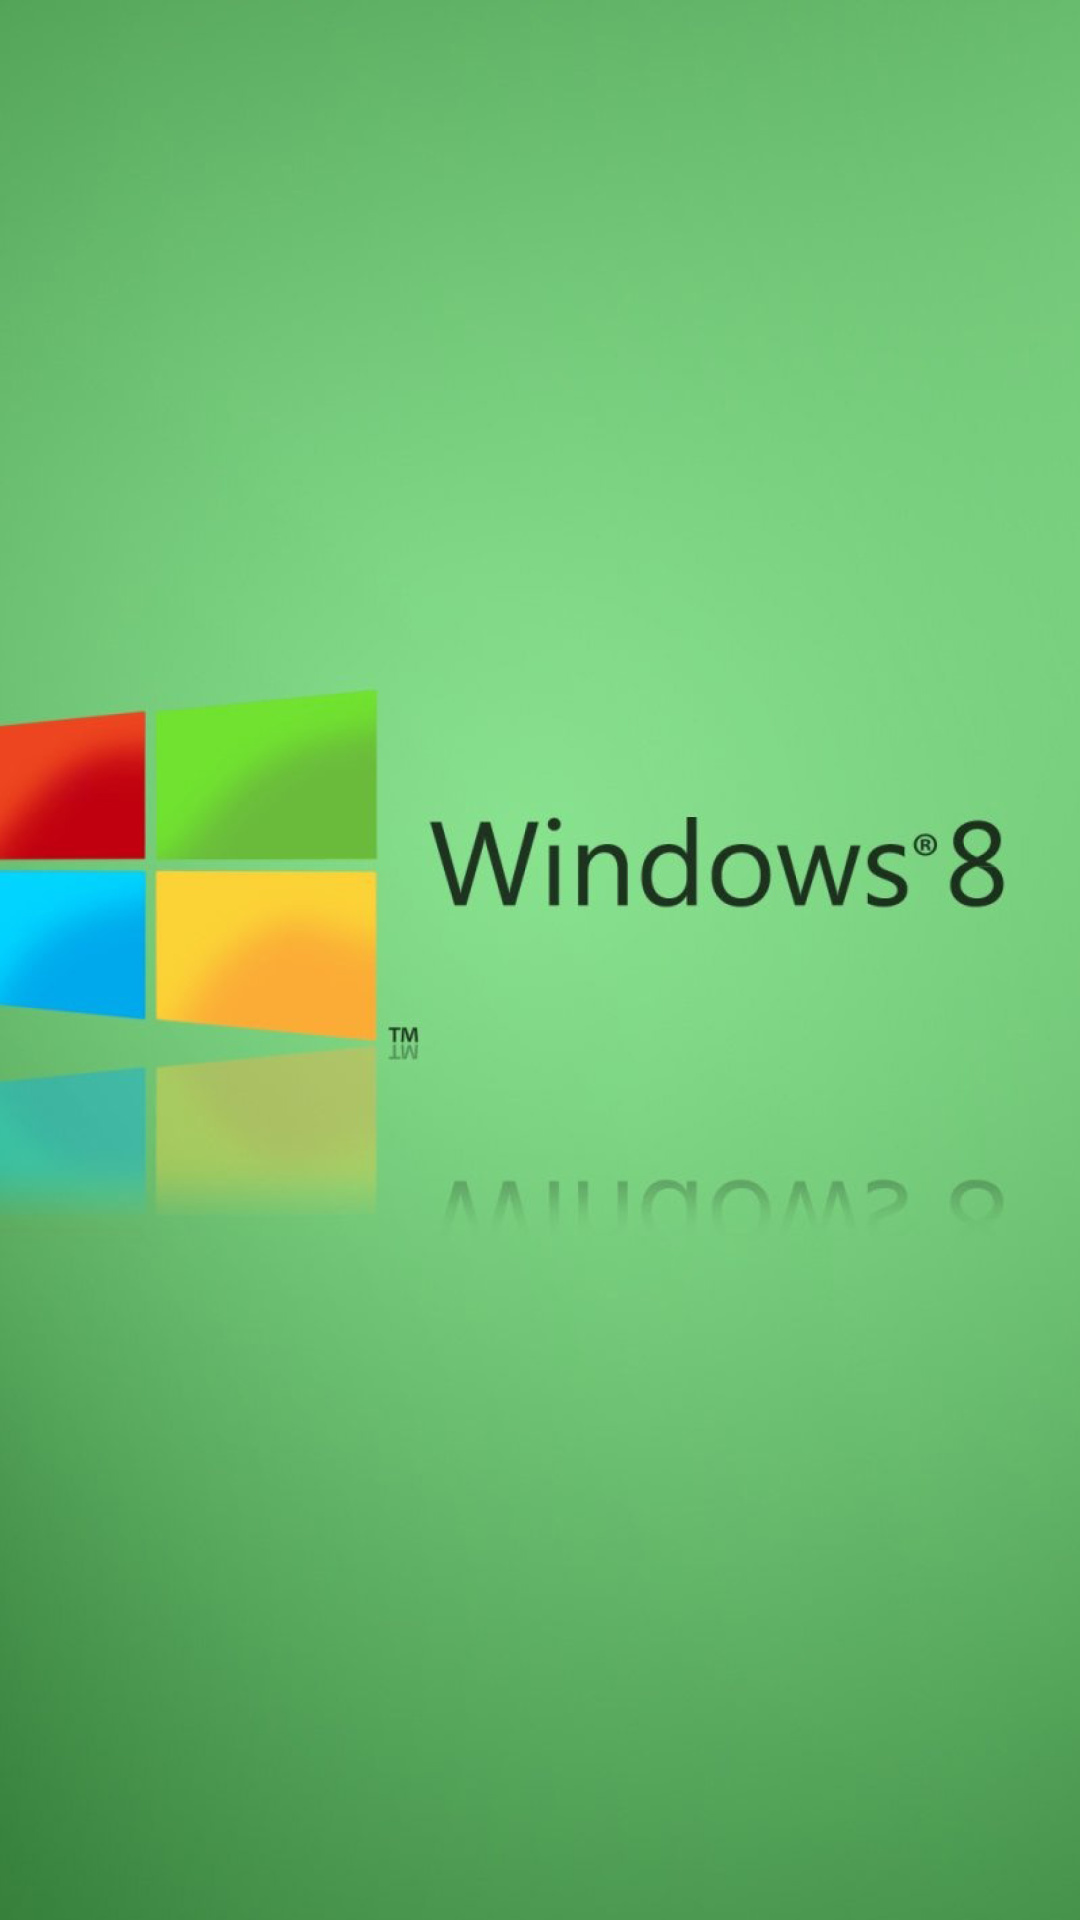 Windows 8 wallpaper 1080x1920